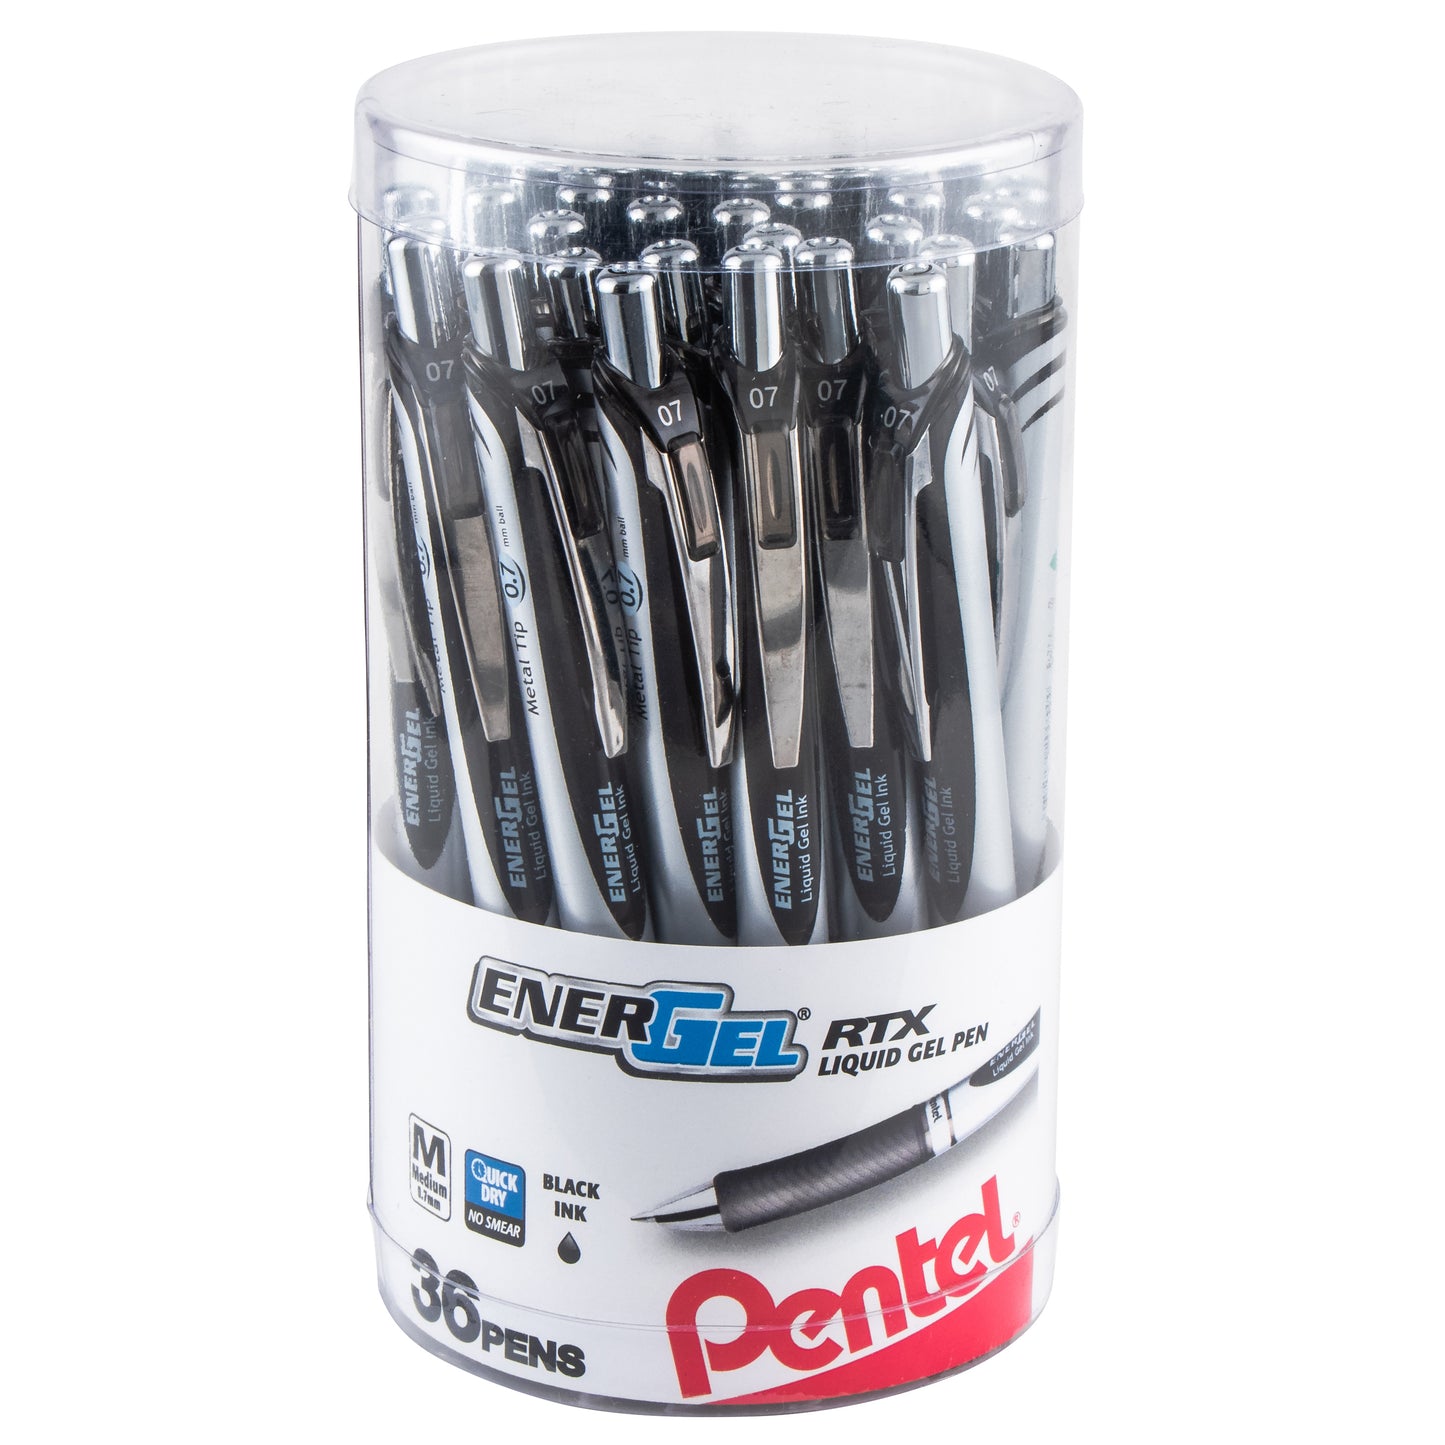 EnerGel RTX Refillable Liquid Gel Pen, 0.7mm, Black Ink 36-pc Canister